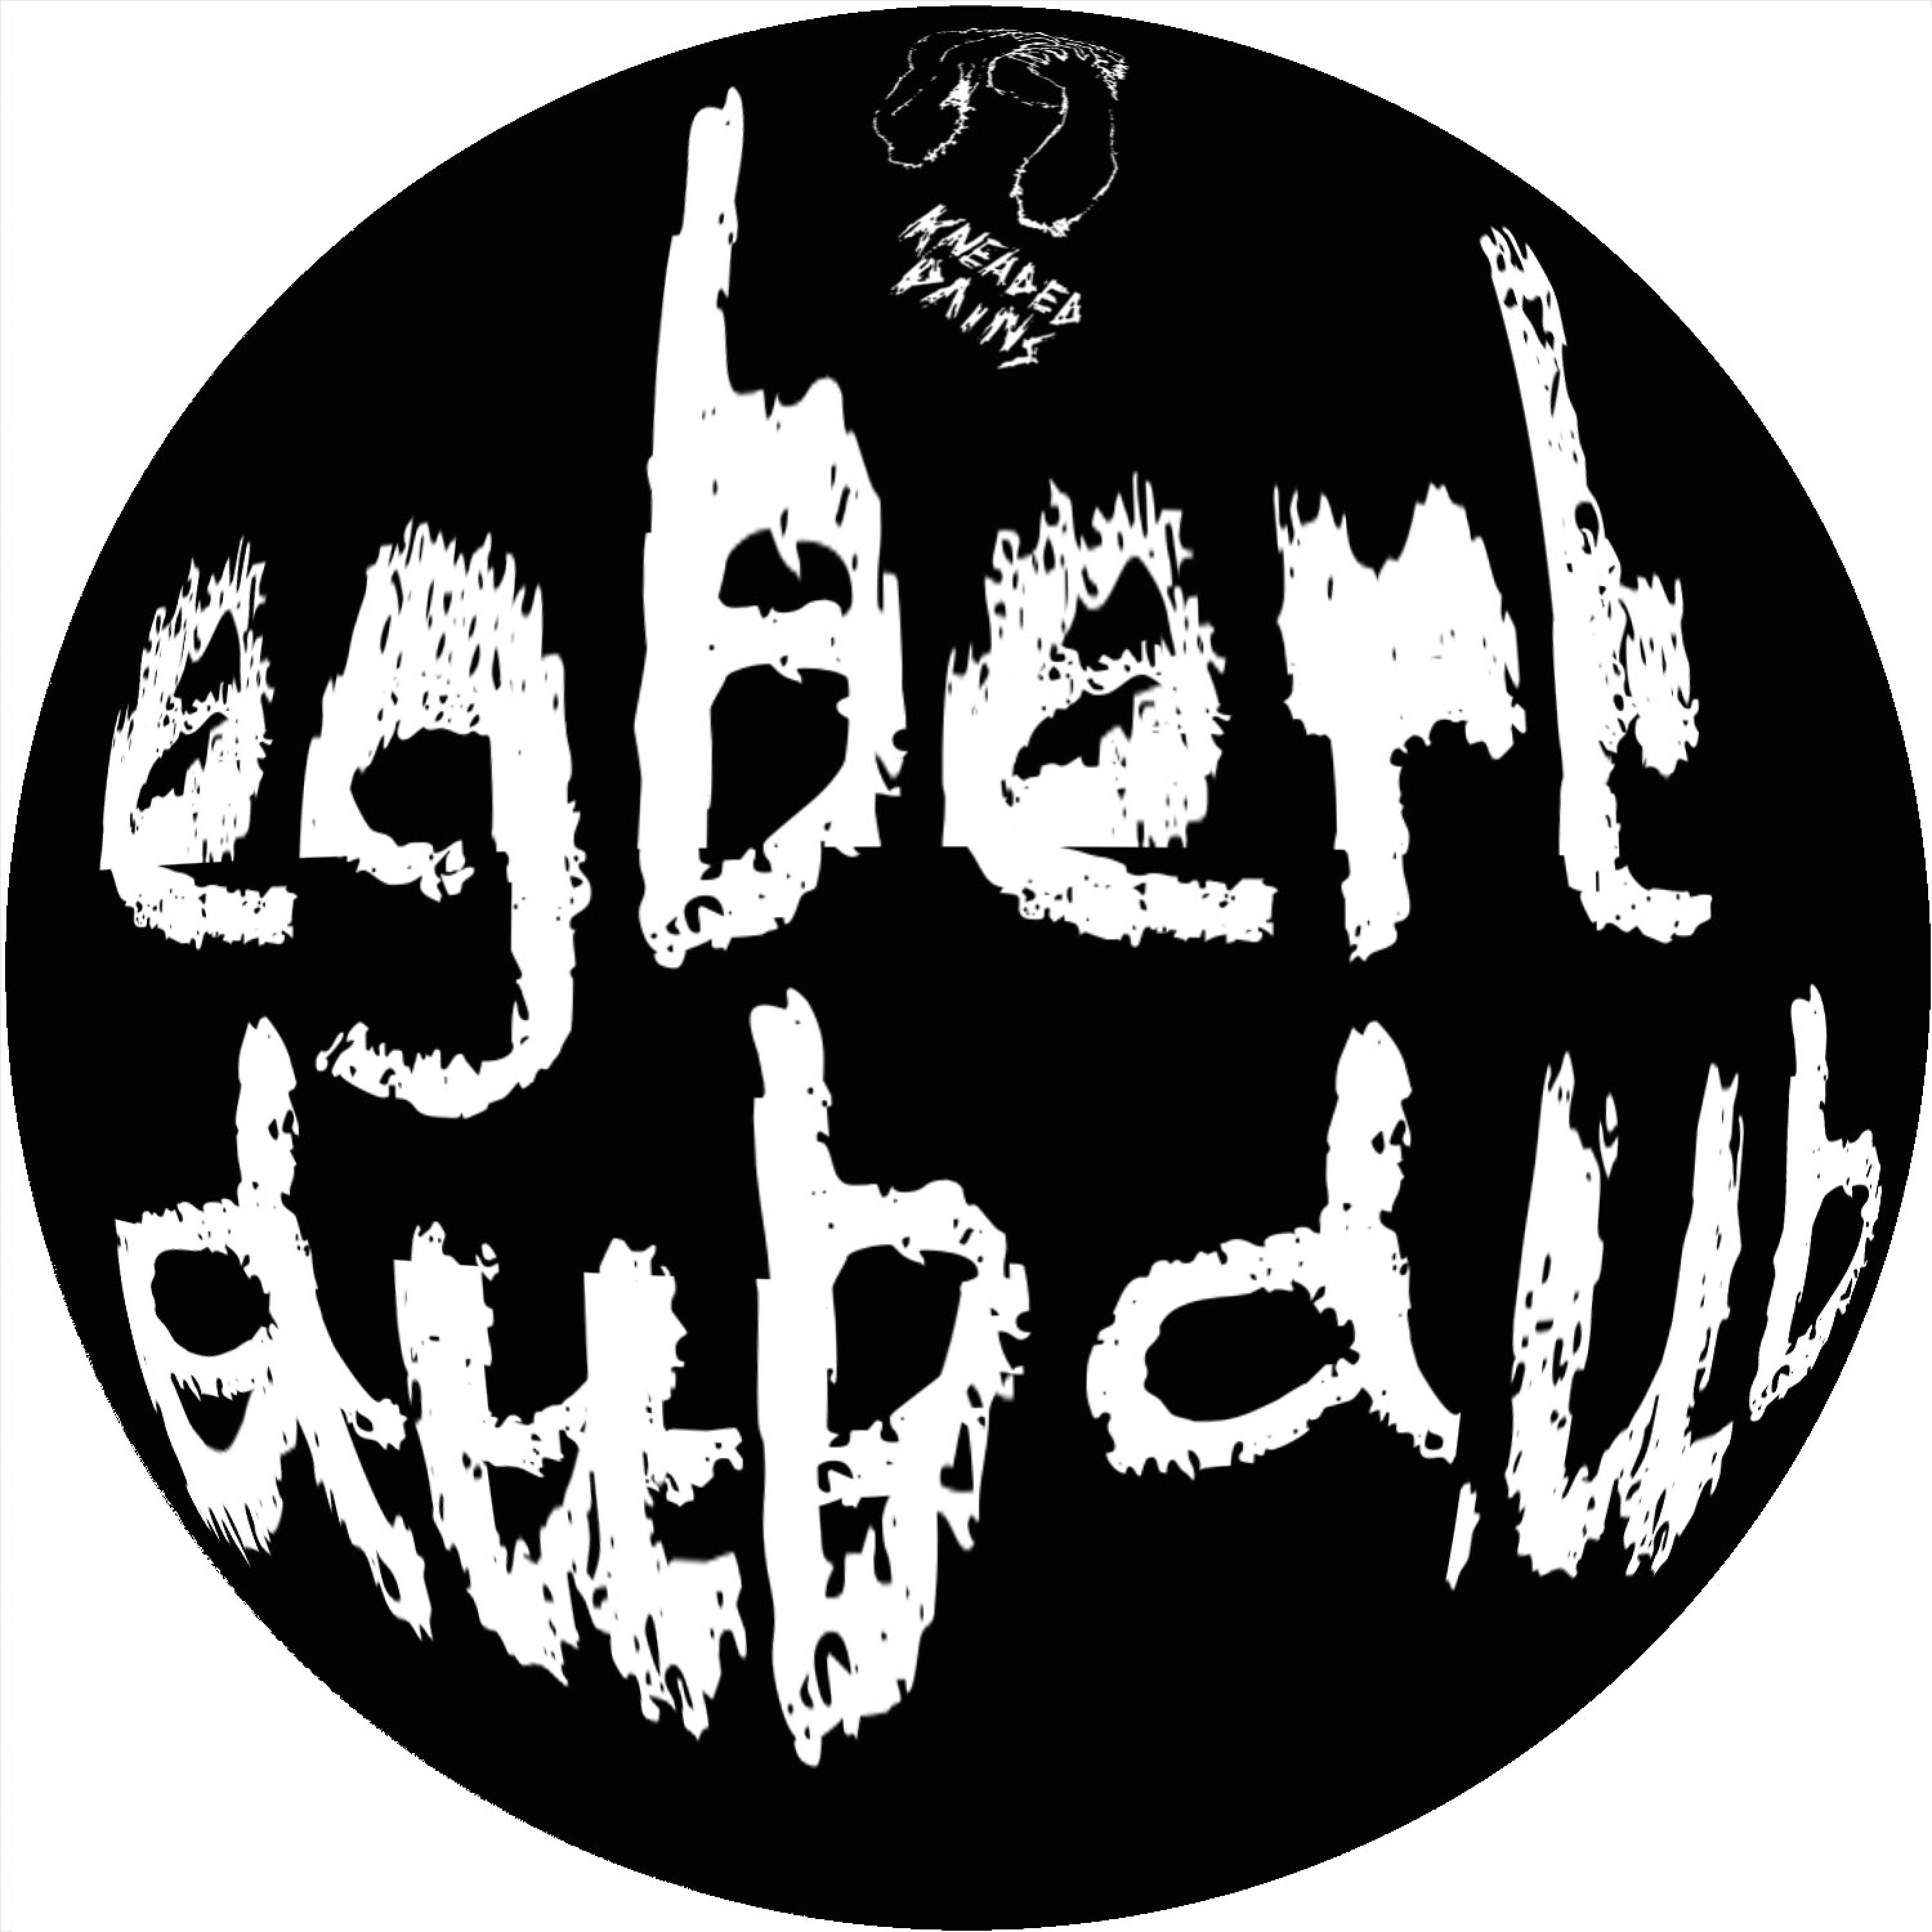 Egbert - I Saw